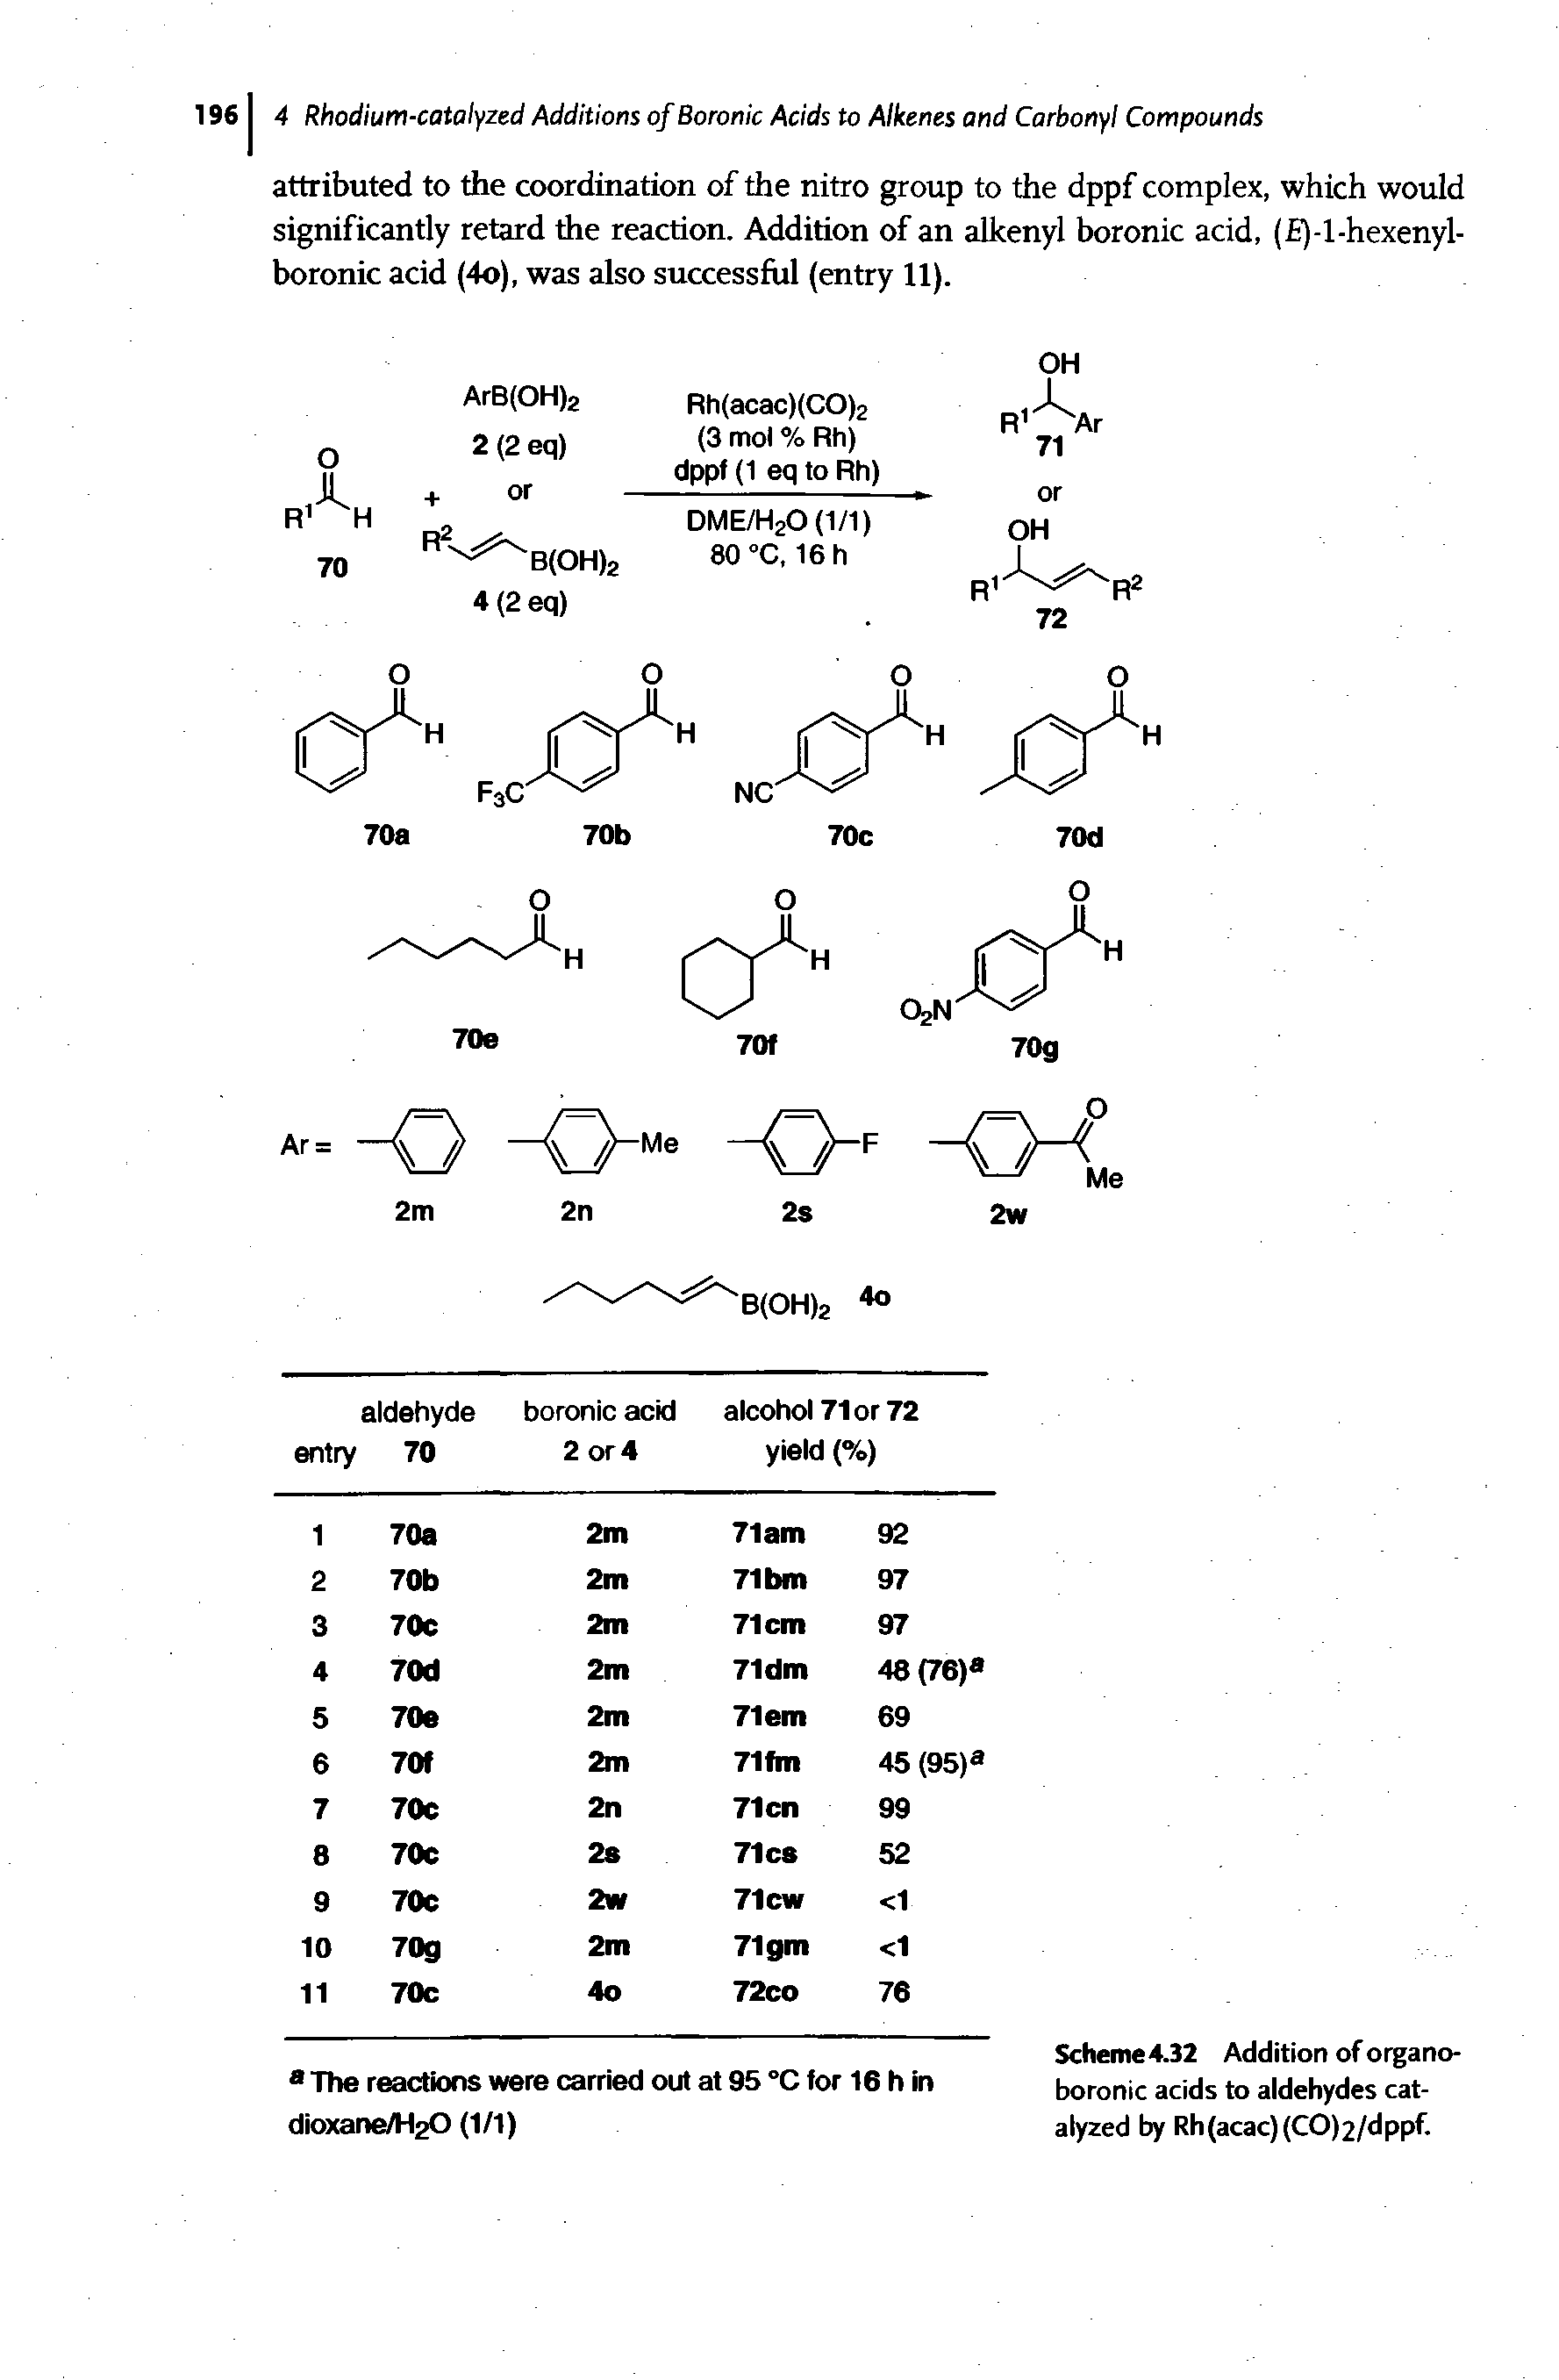 Scheme 4.32 Addition of organo-boronic acids to aldehydes catalyzed by Rh(acac)(CO)2/dppf.